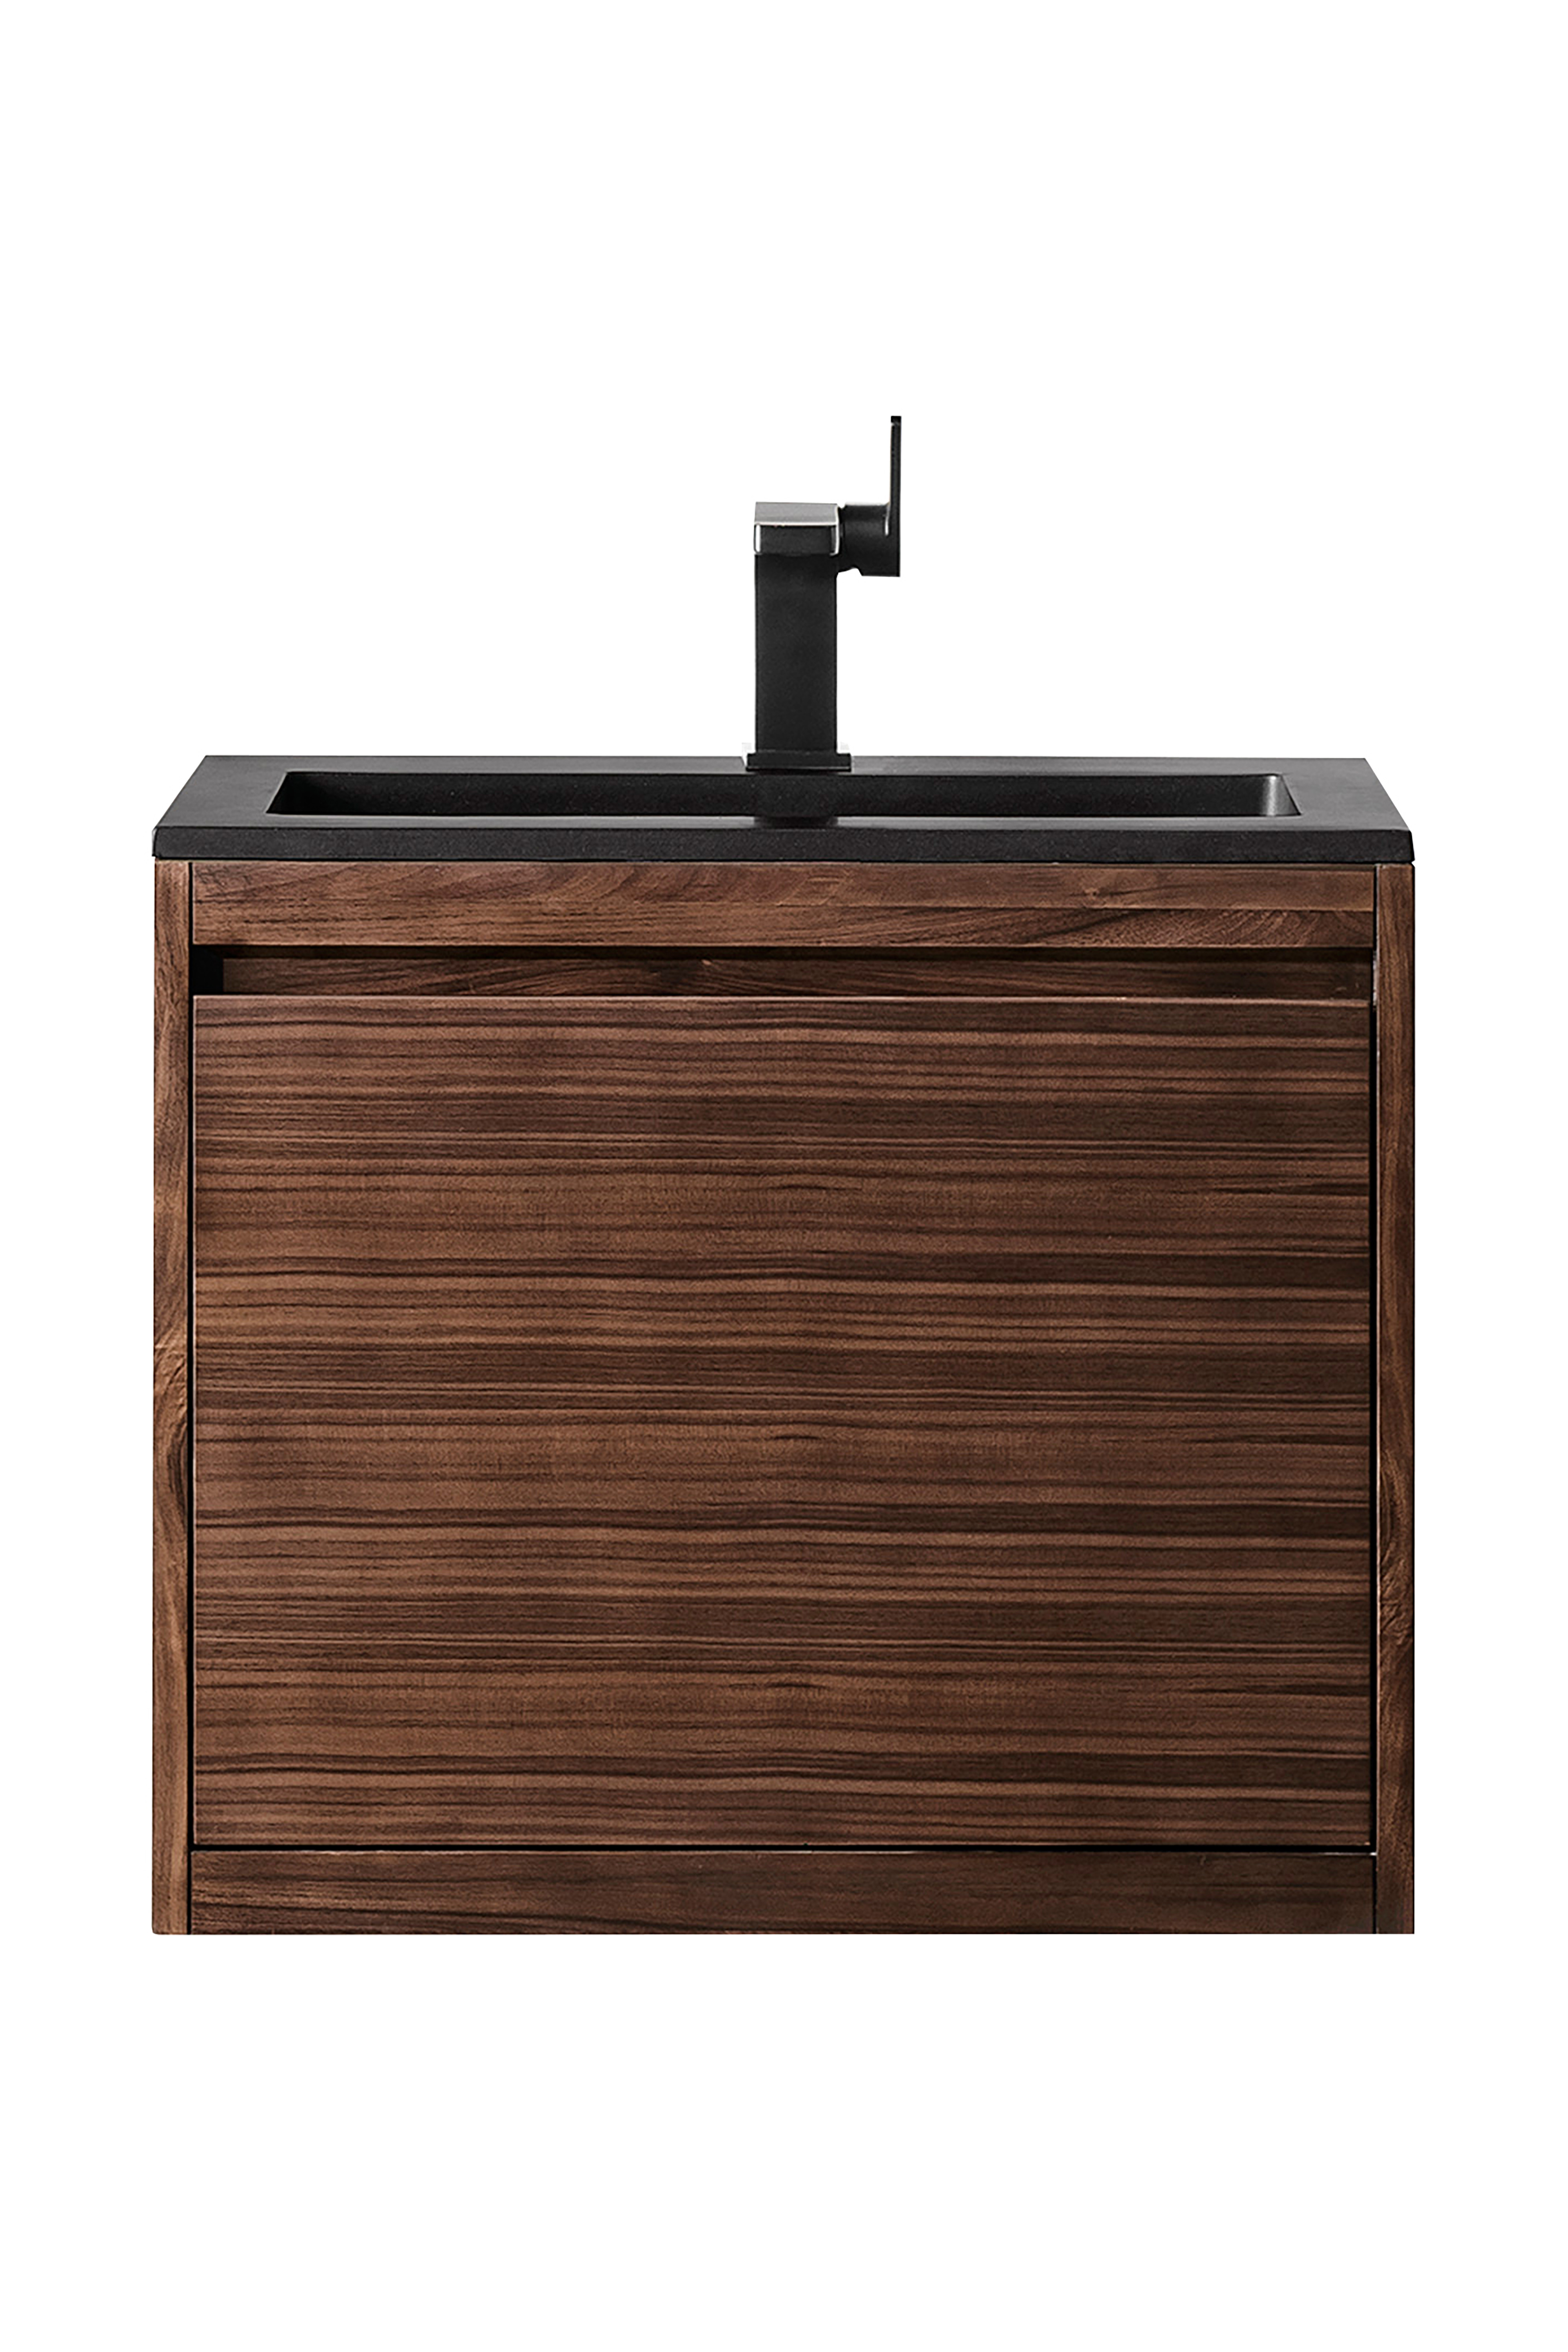 James Martin 801V23.6WLTCHB Milan 23.6" Single Vanity Cabinet, Mid Century Walnut w/Charcoal Black Composite Top